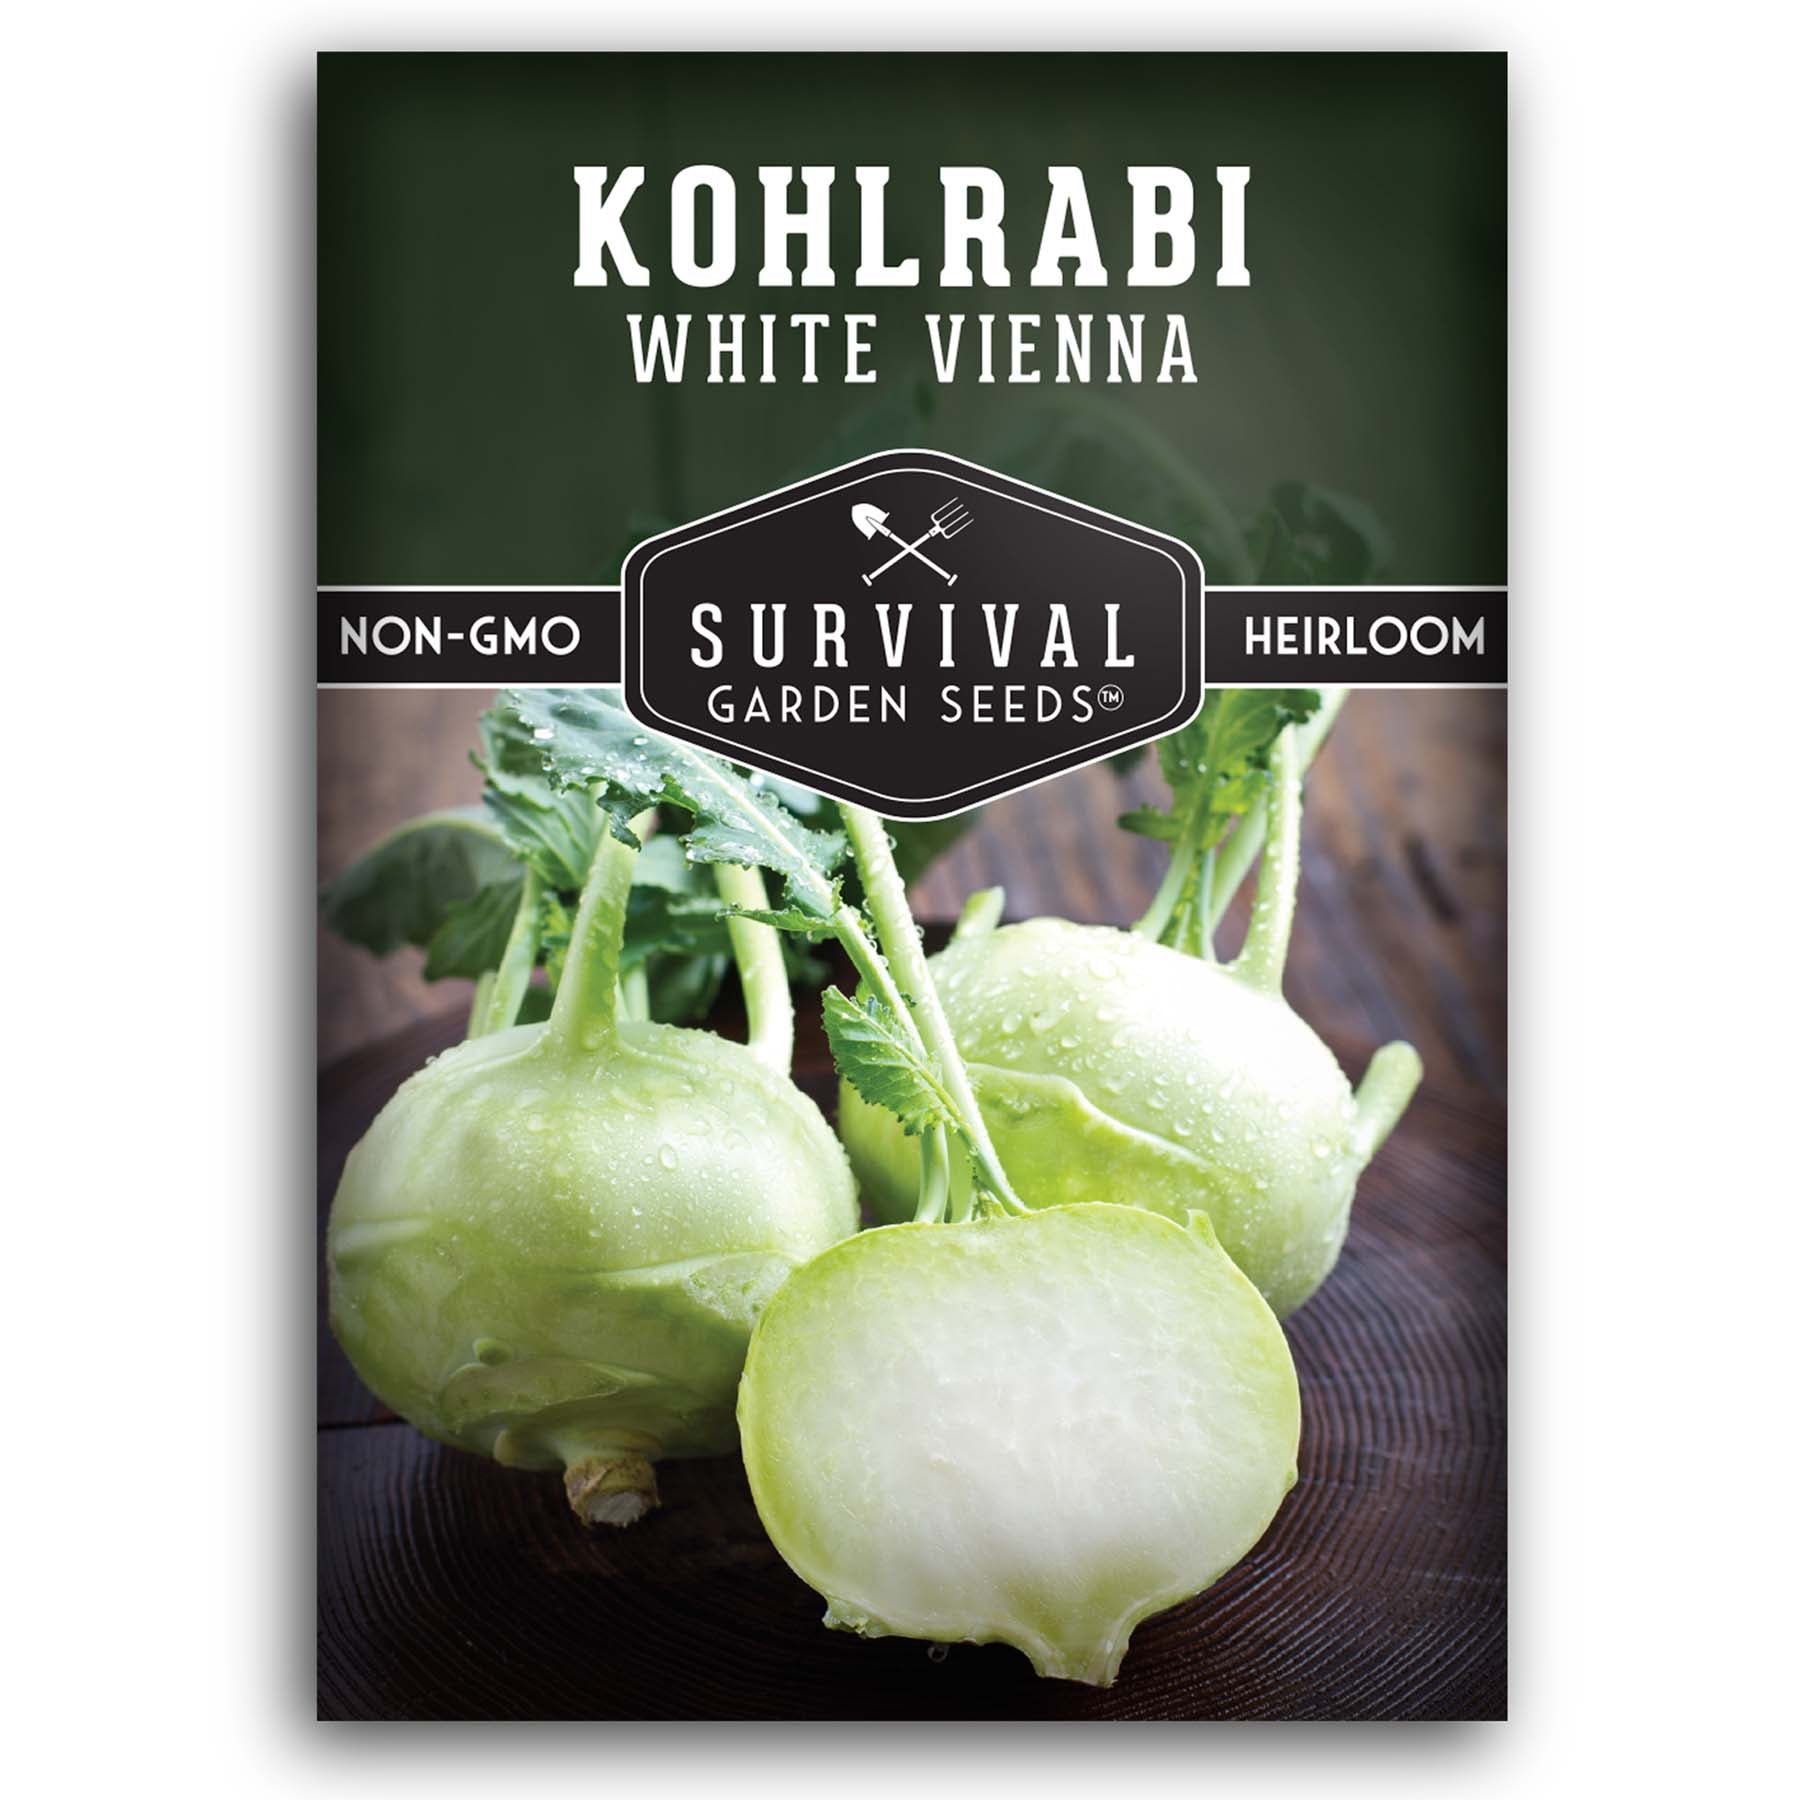 White Vienna Kohlrabi seed for planting